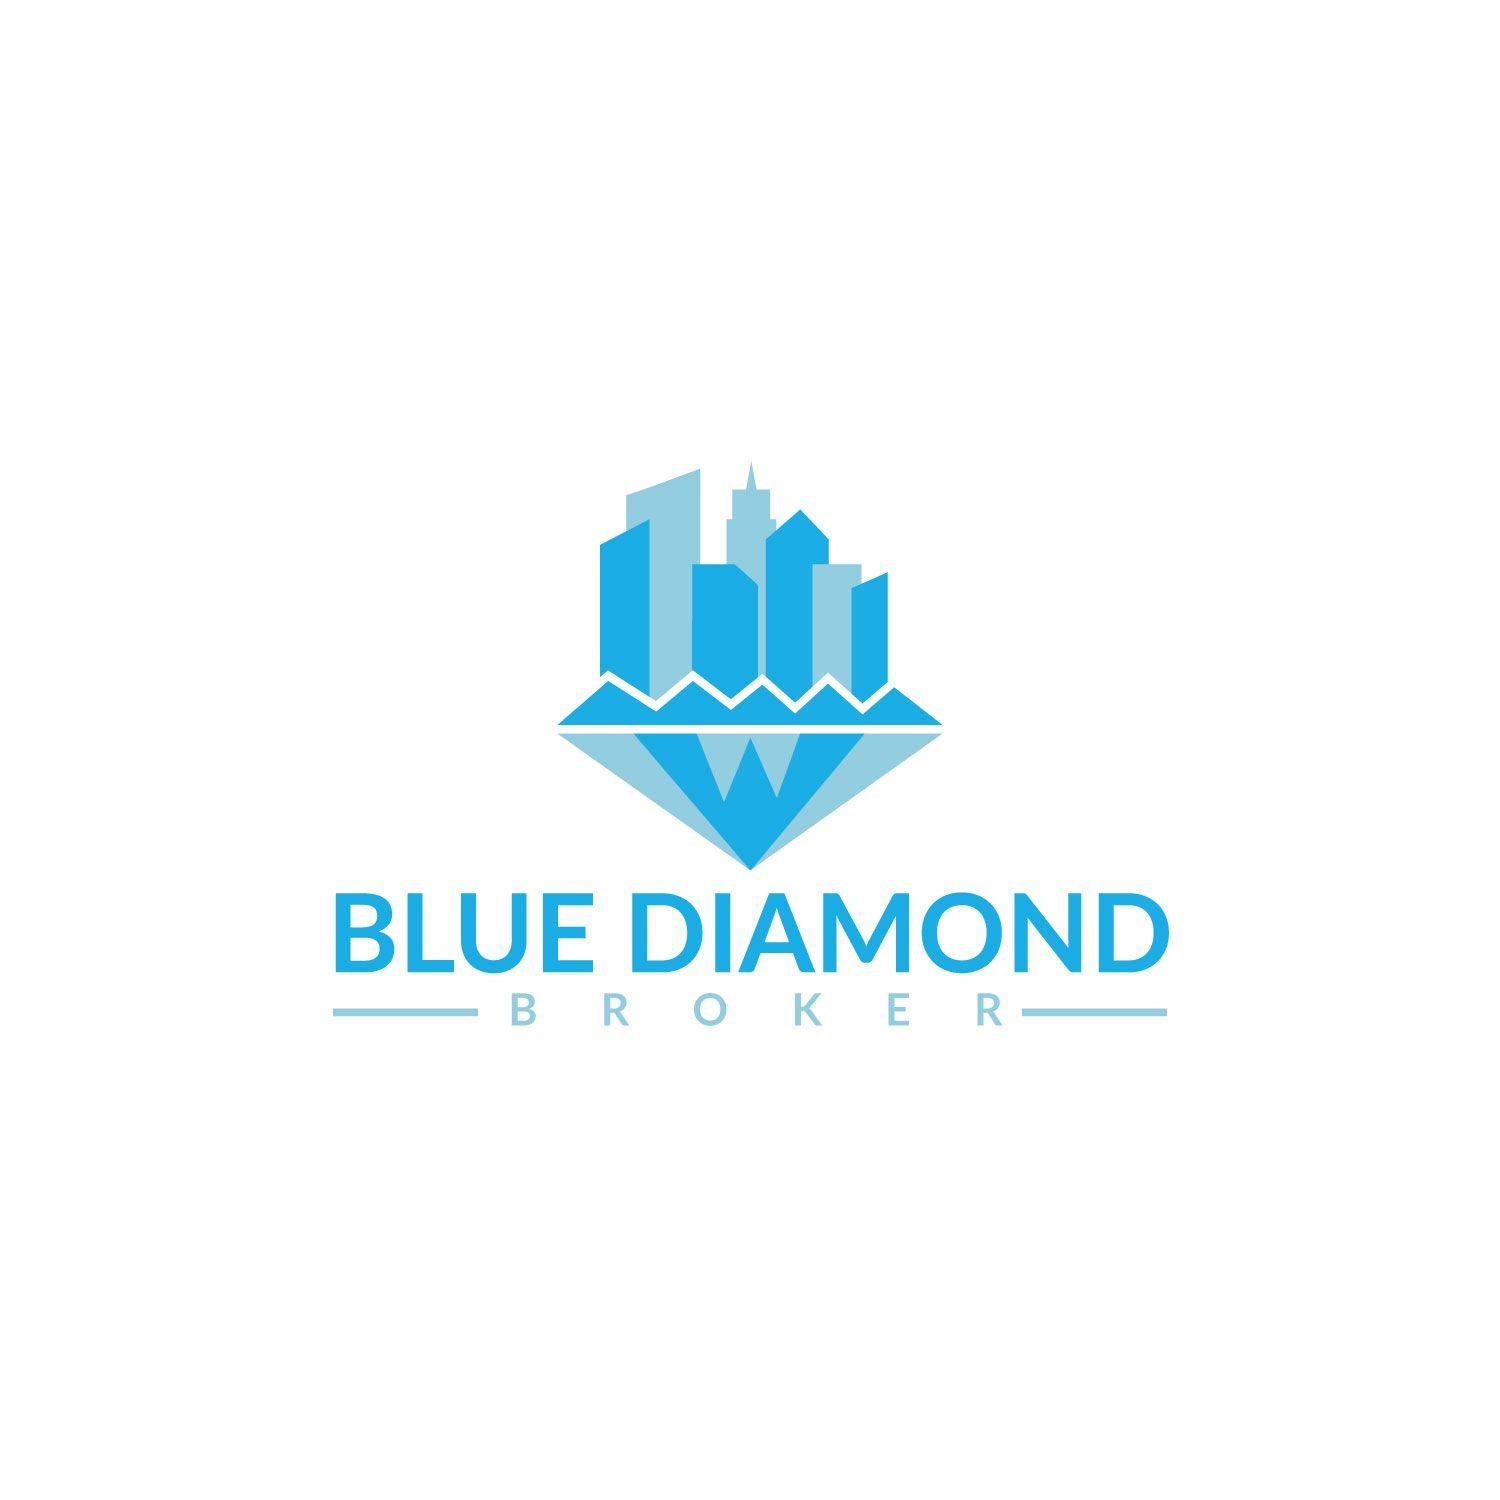 Blue Diamond Logo - Serious, Modern, Real Estate Logo Design for Blue Diamond Broker by ...